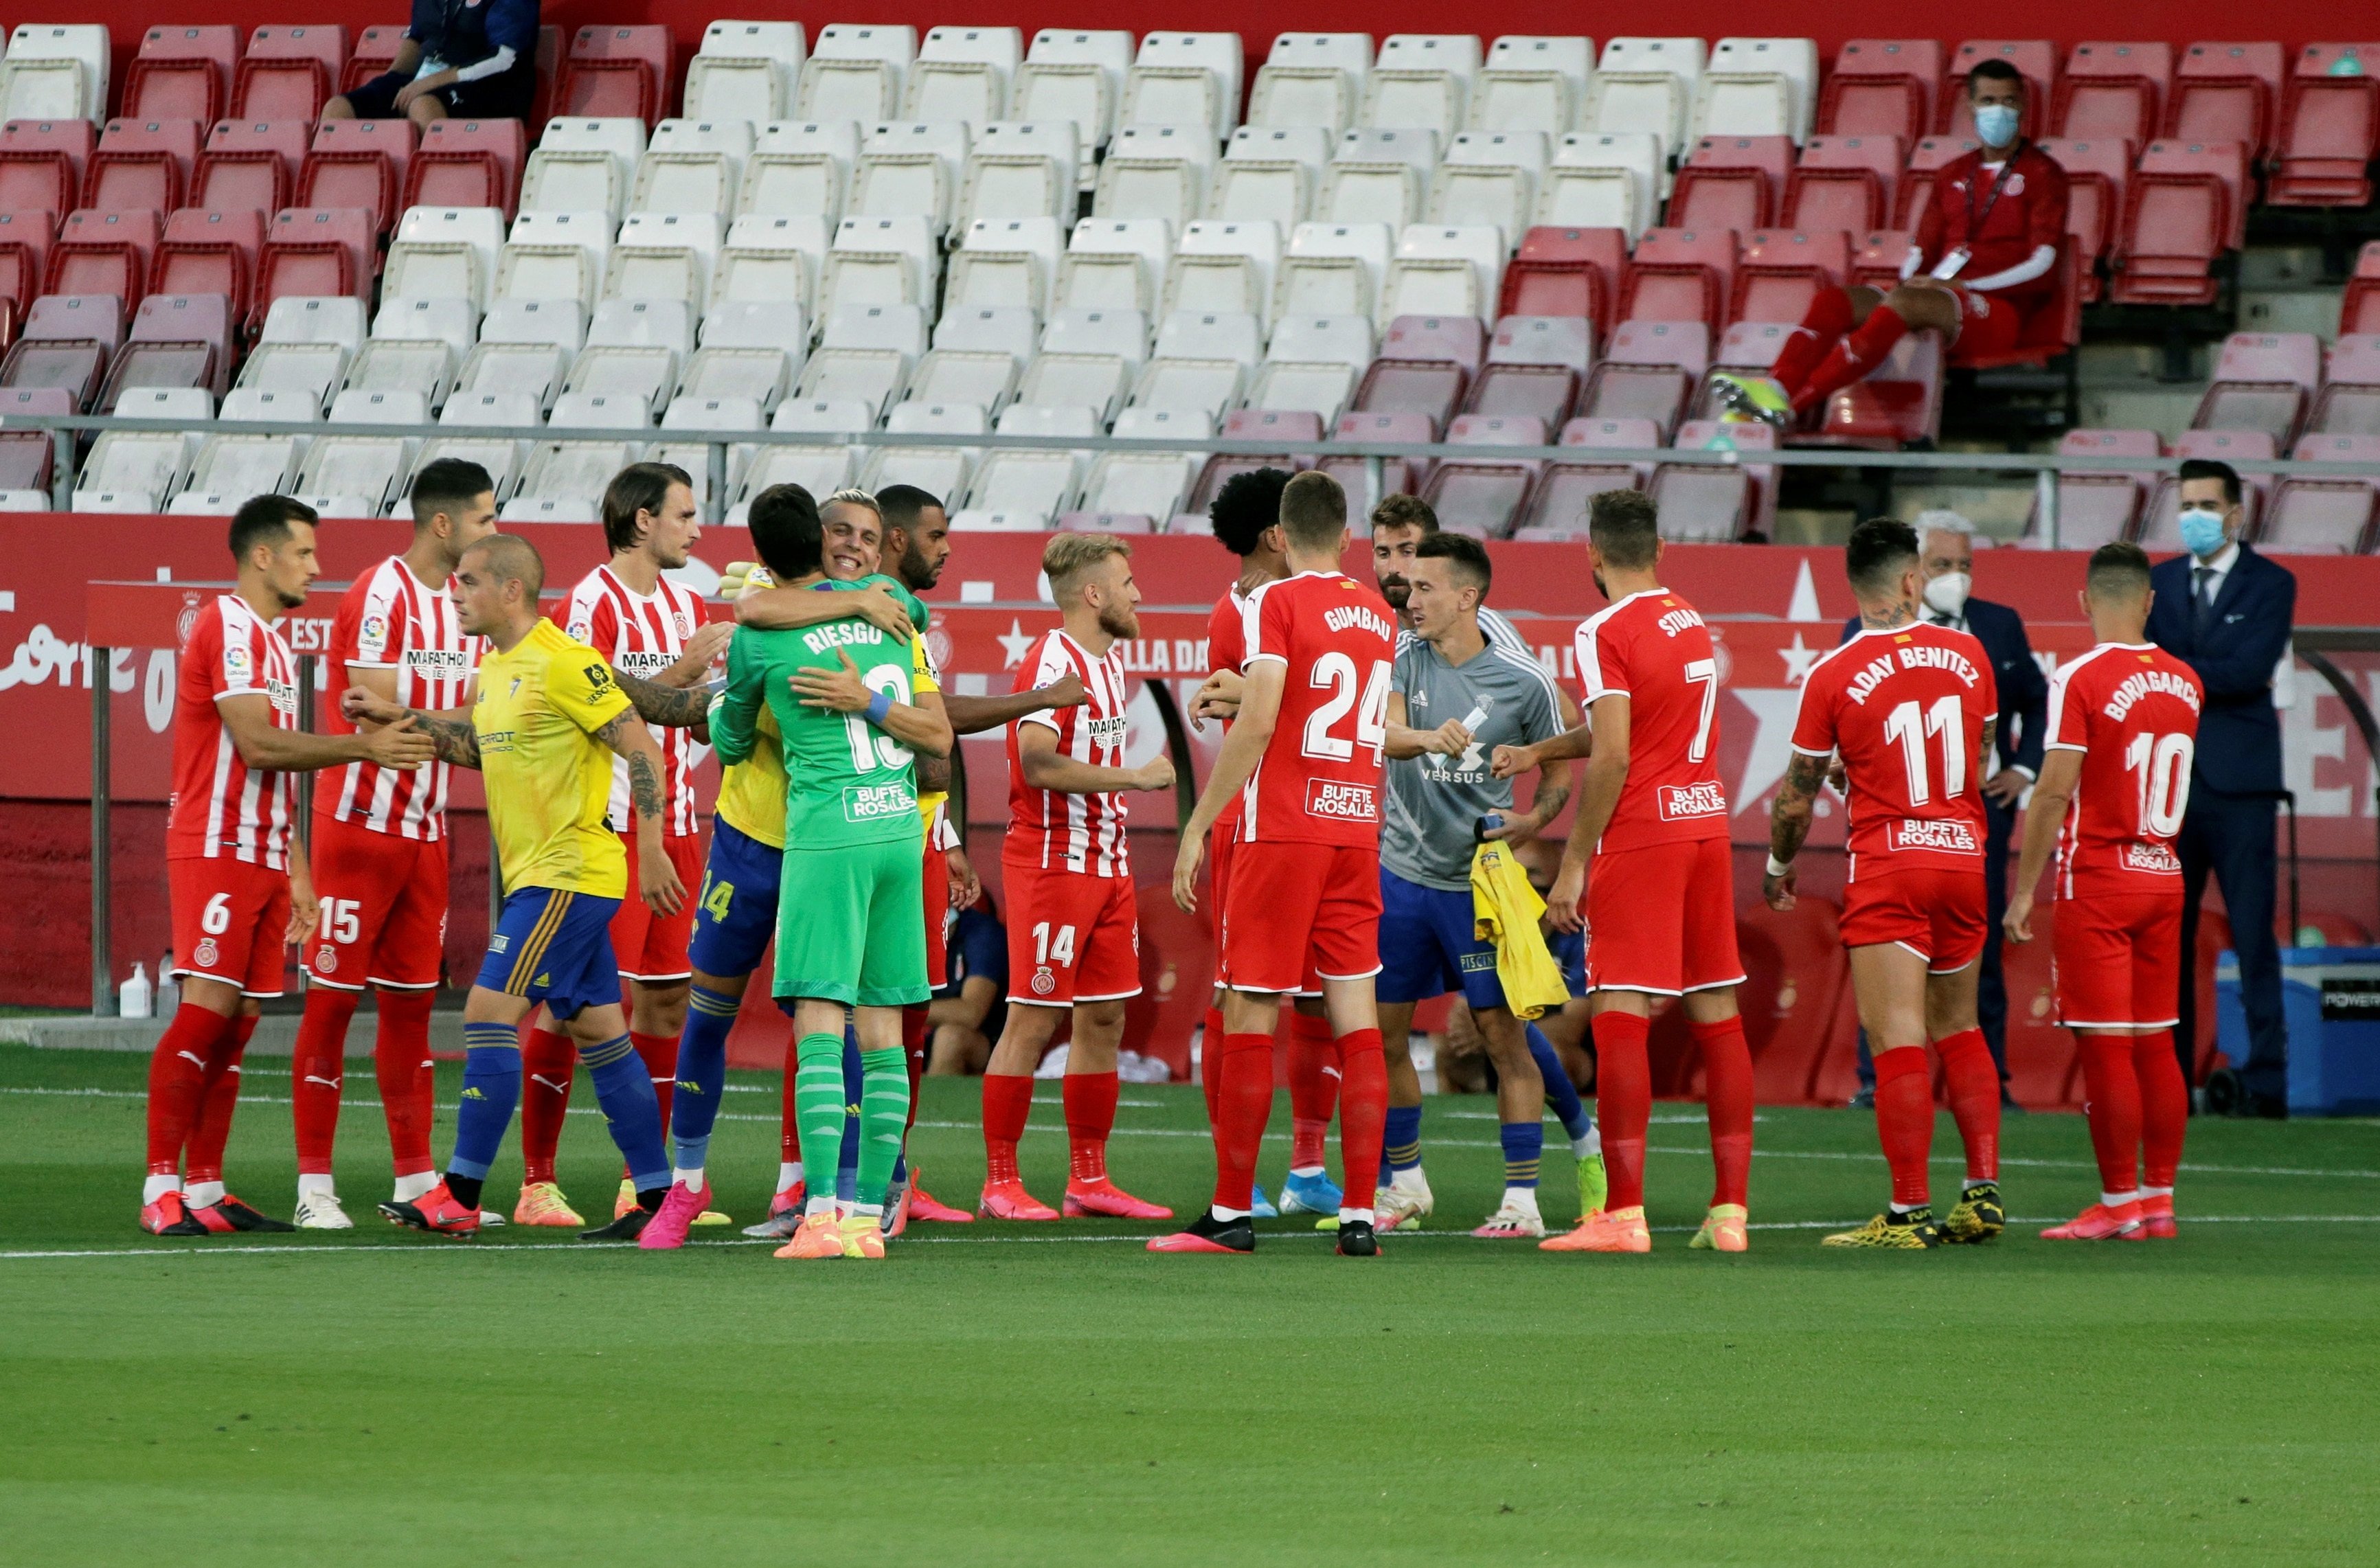 La Liga comunica al Girona el cambio de fechas del play-off de ascenso a Primera